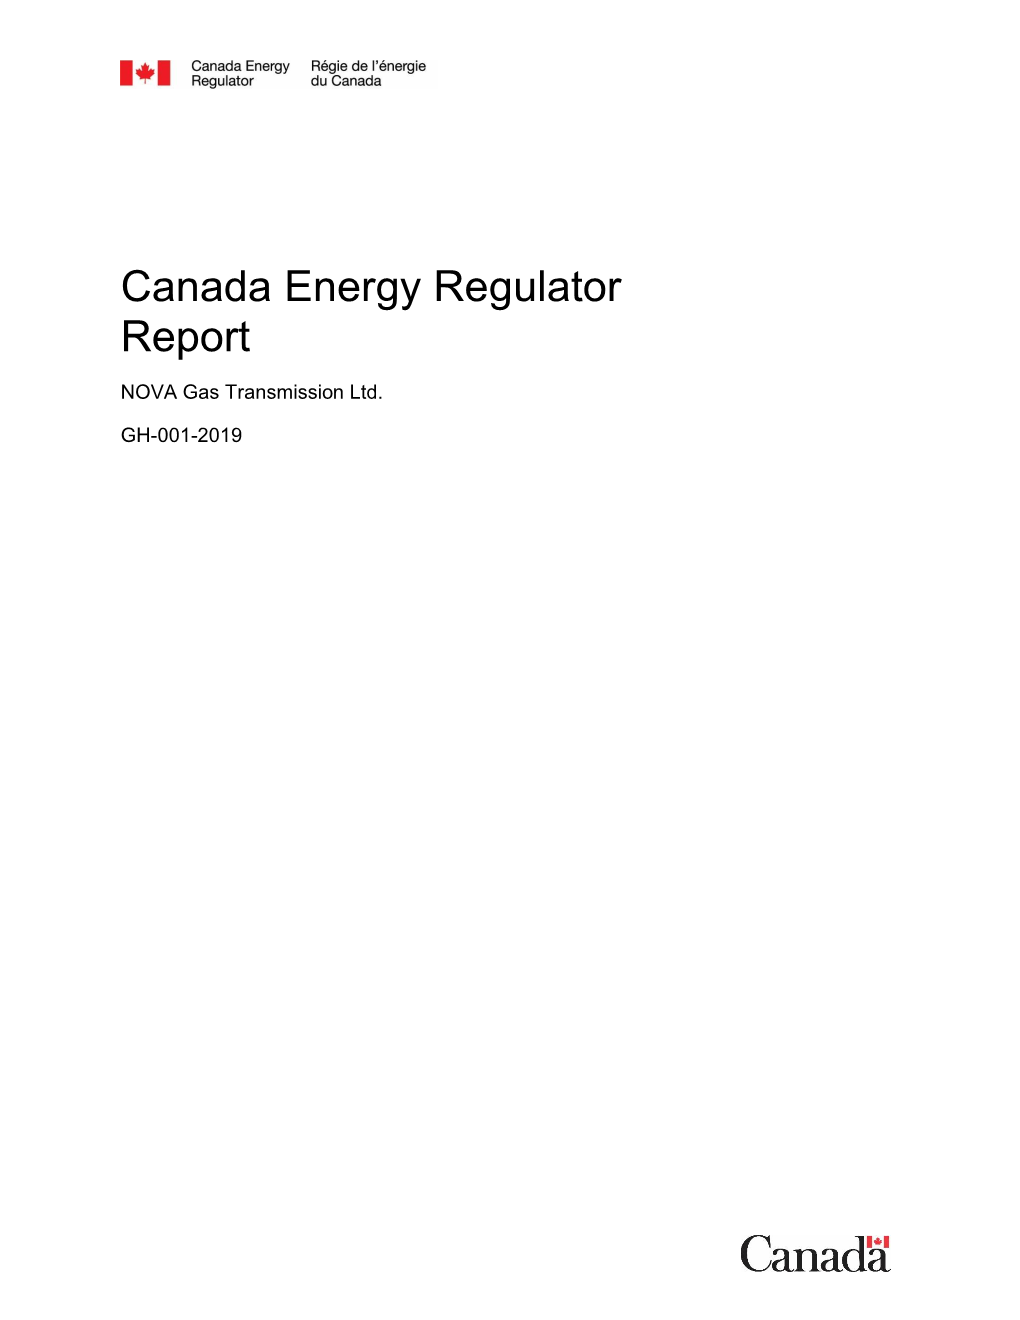 Canada Energy Regulator Report